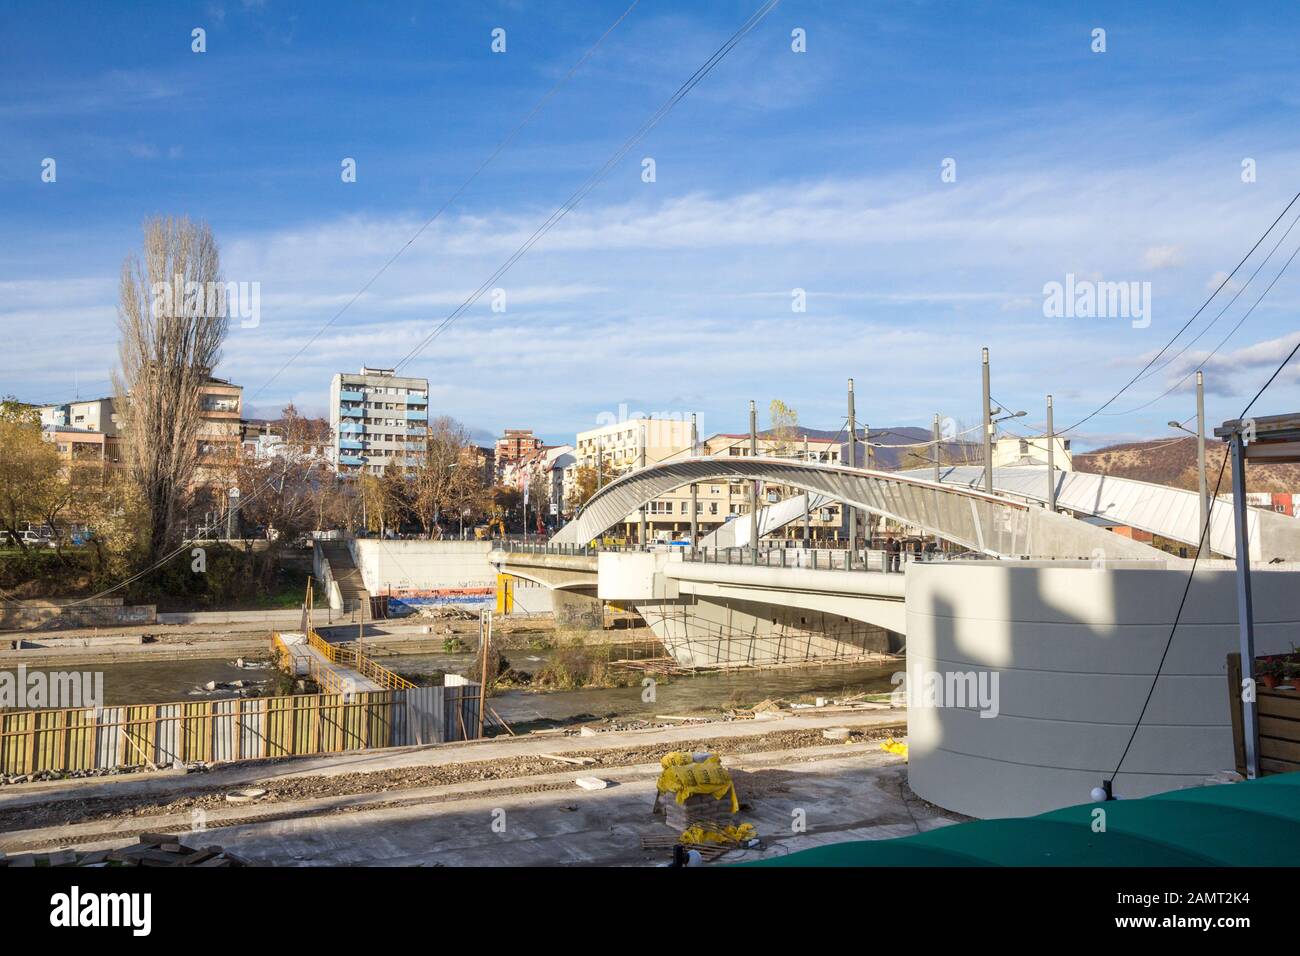 MITROVICA, KOSOVO - NOVEMBER 13, 2016: New bridge of Mitrovica, also called Ibar most na drinu, symbol of the separation between Albanians and Serbs i Stock Photo